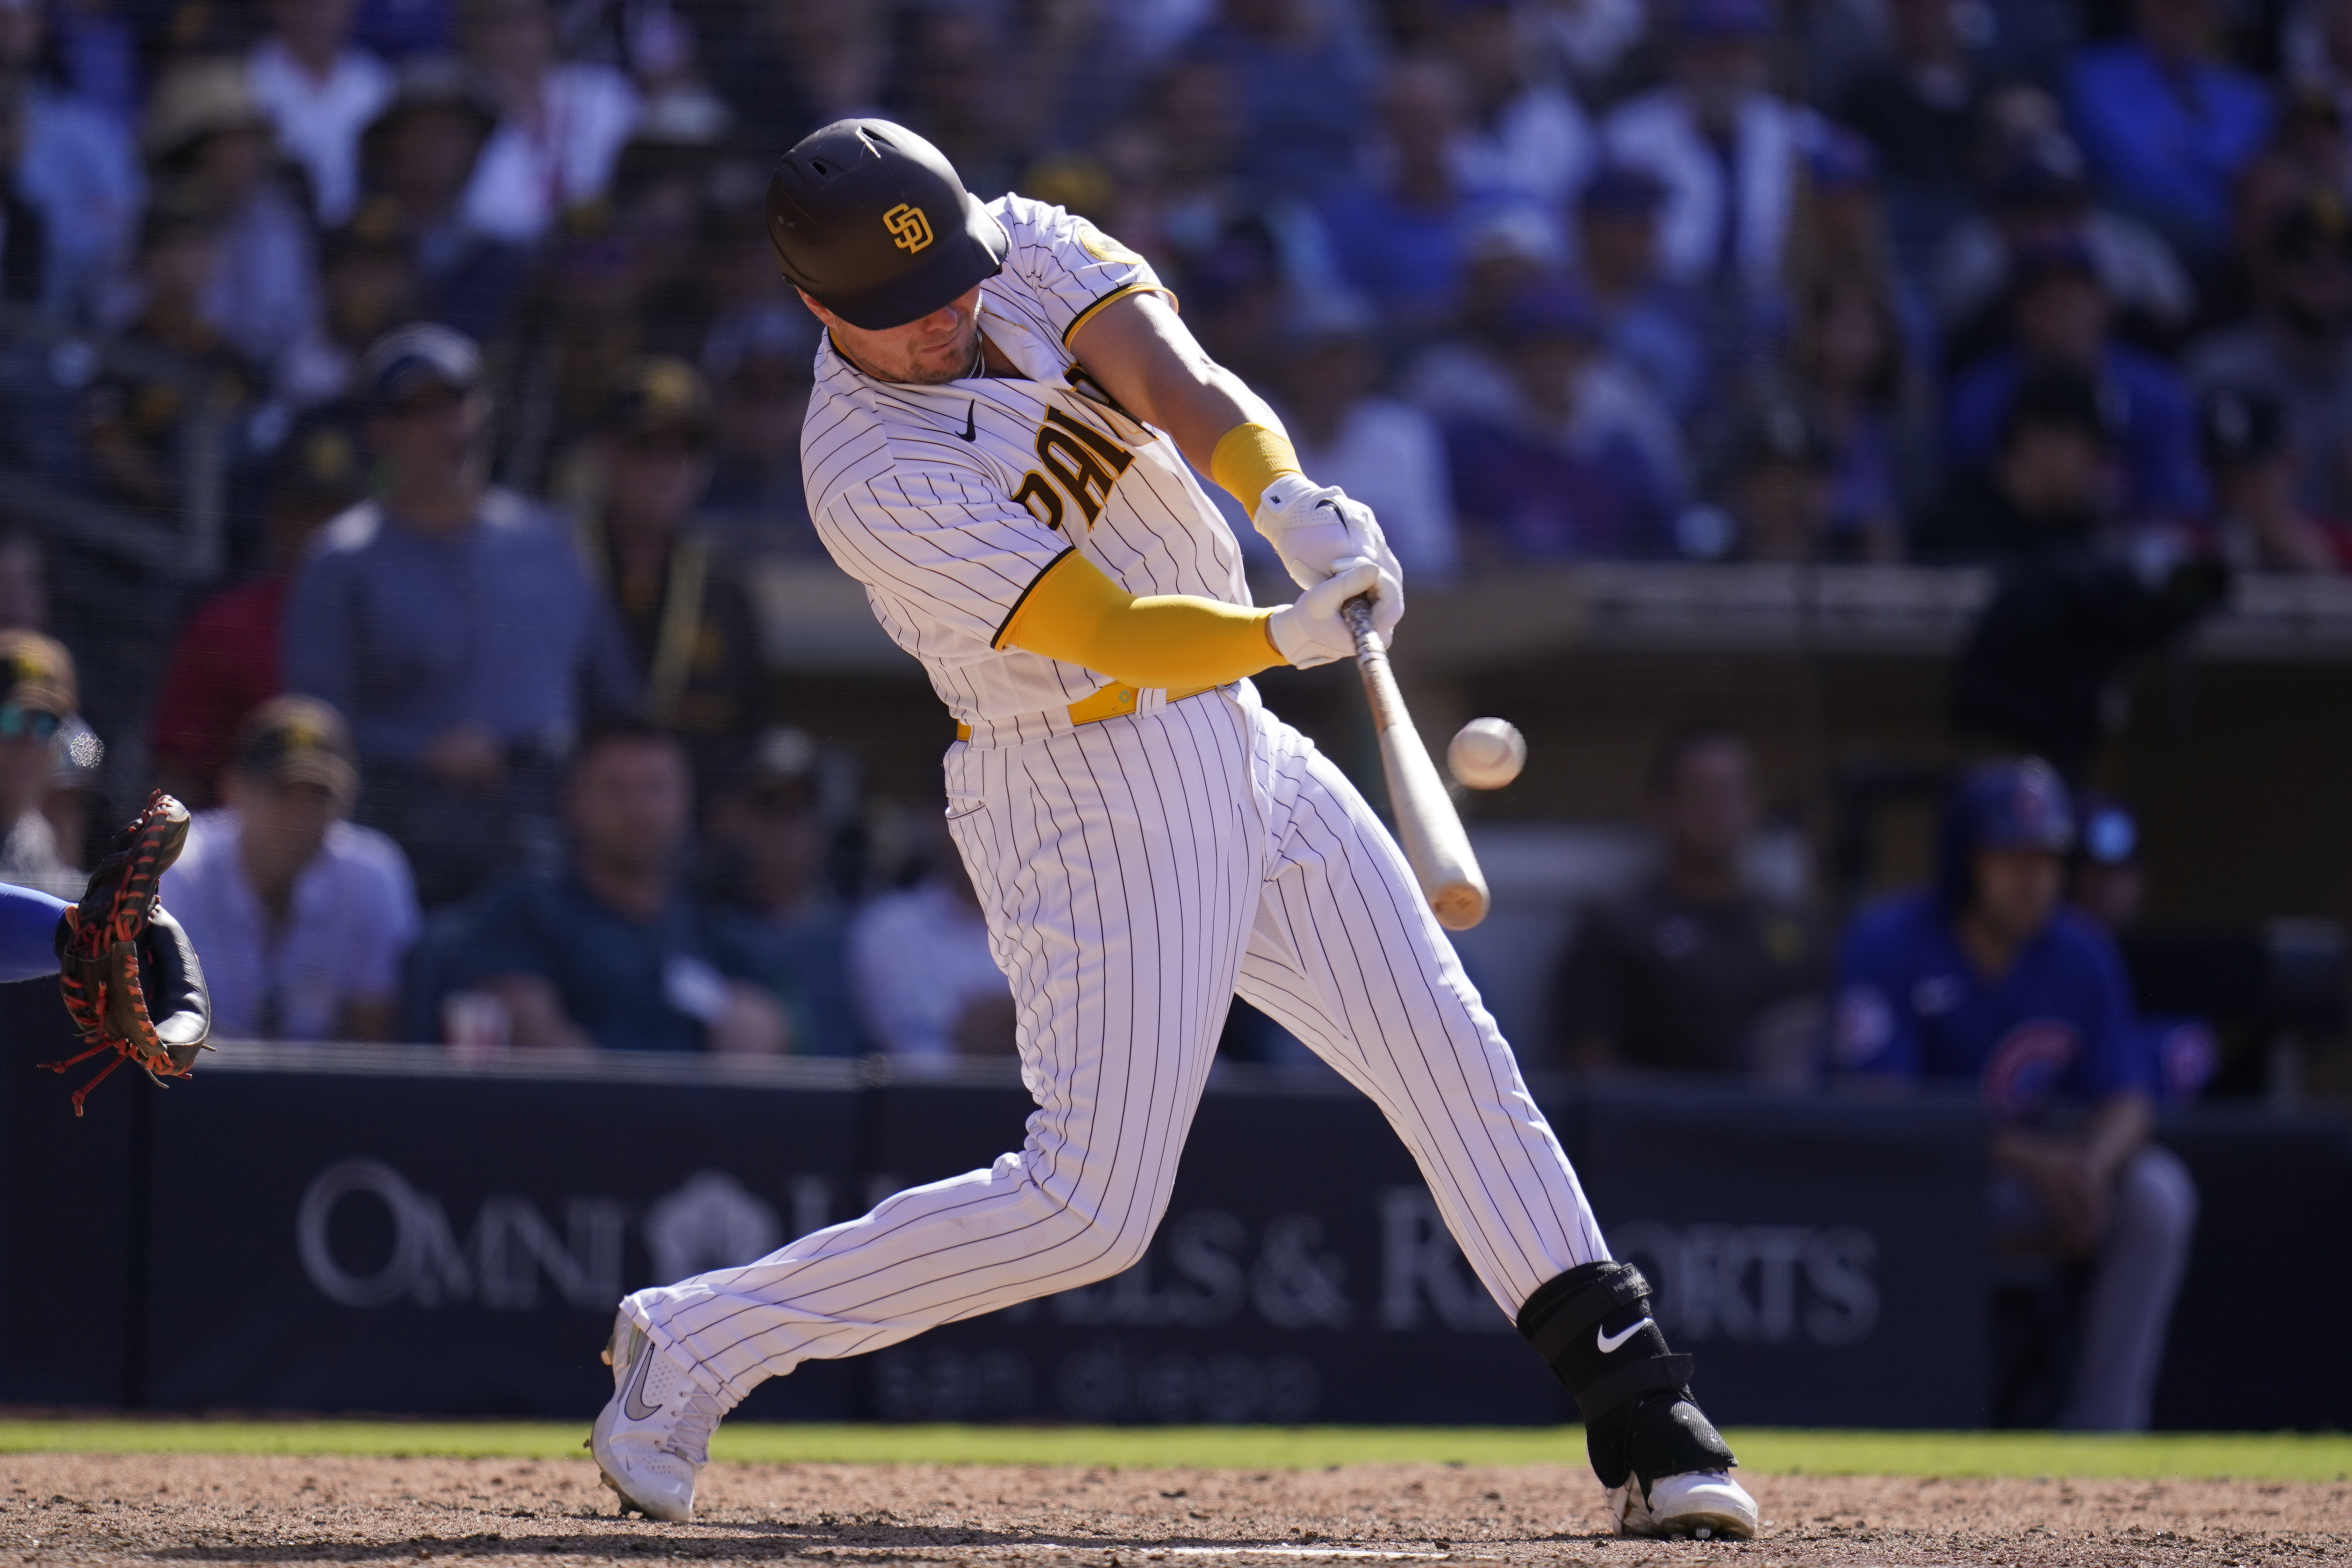 Yankees: Luke Voit looks gimpy rounding bases after monster home run